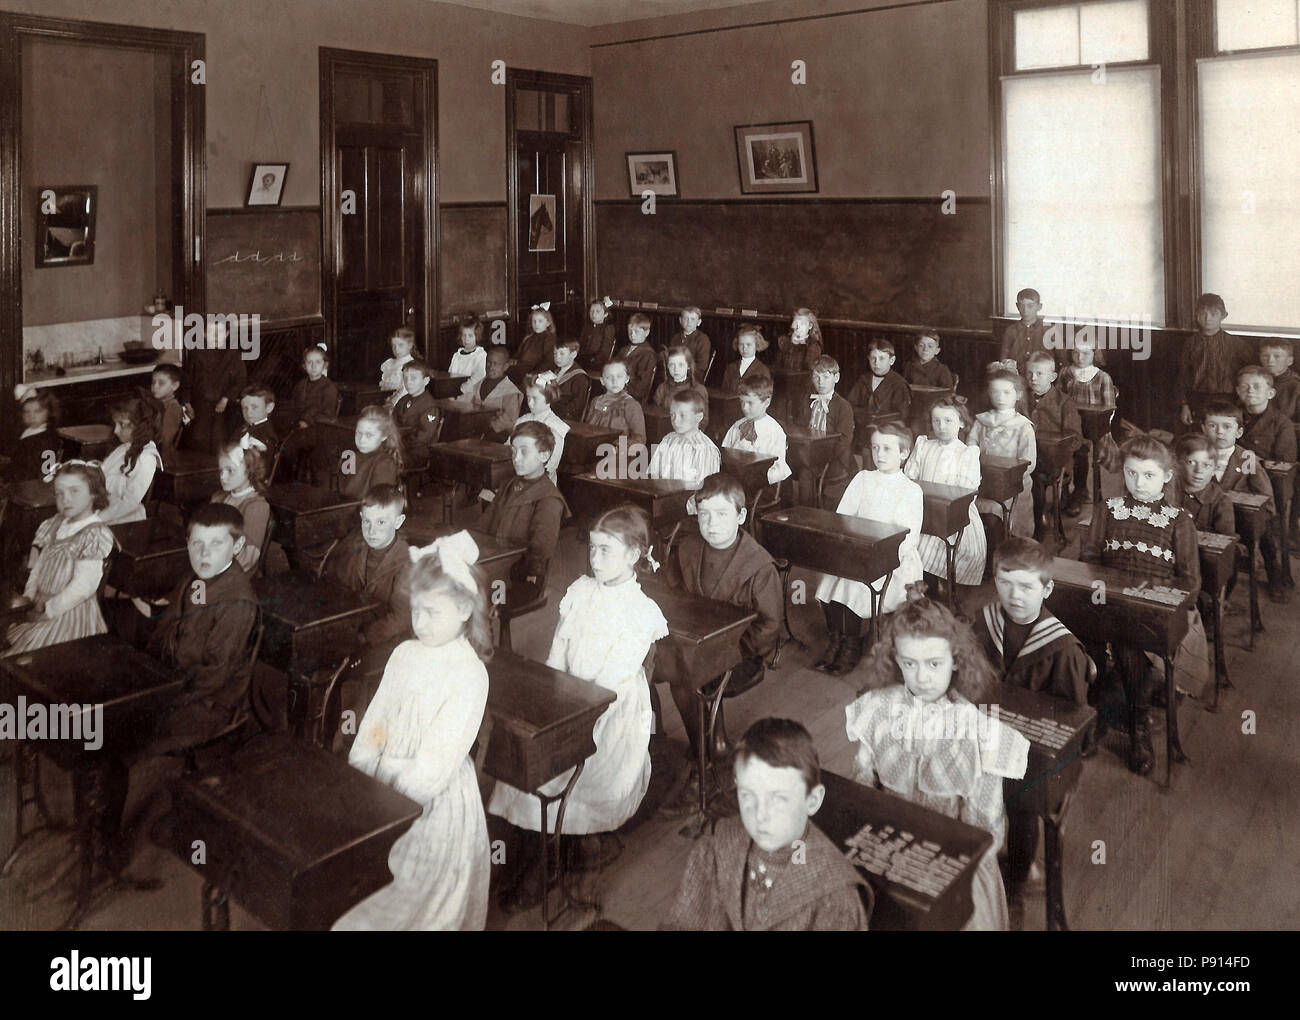 Vintage classroom of school children at desks circa 1890s. Stock Photo